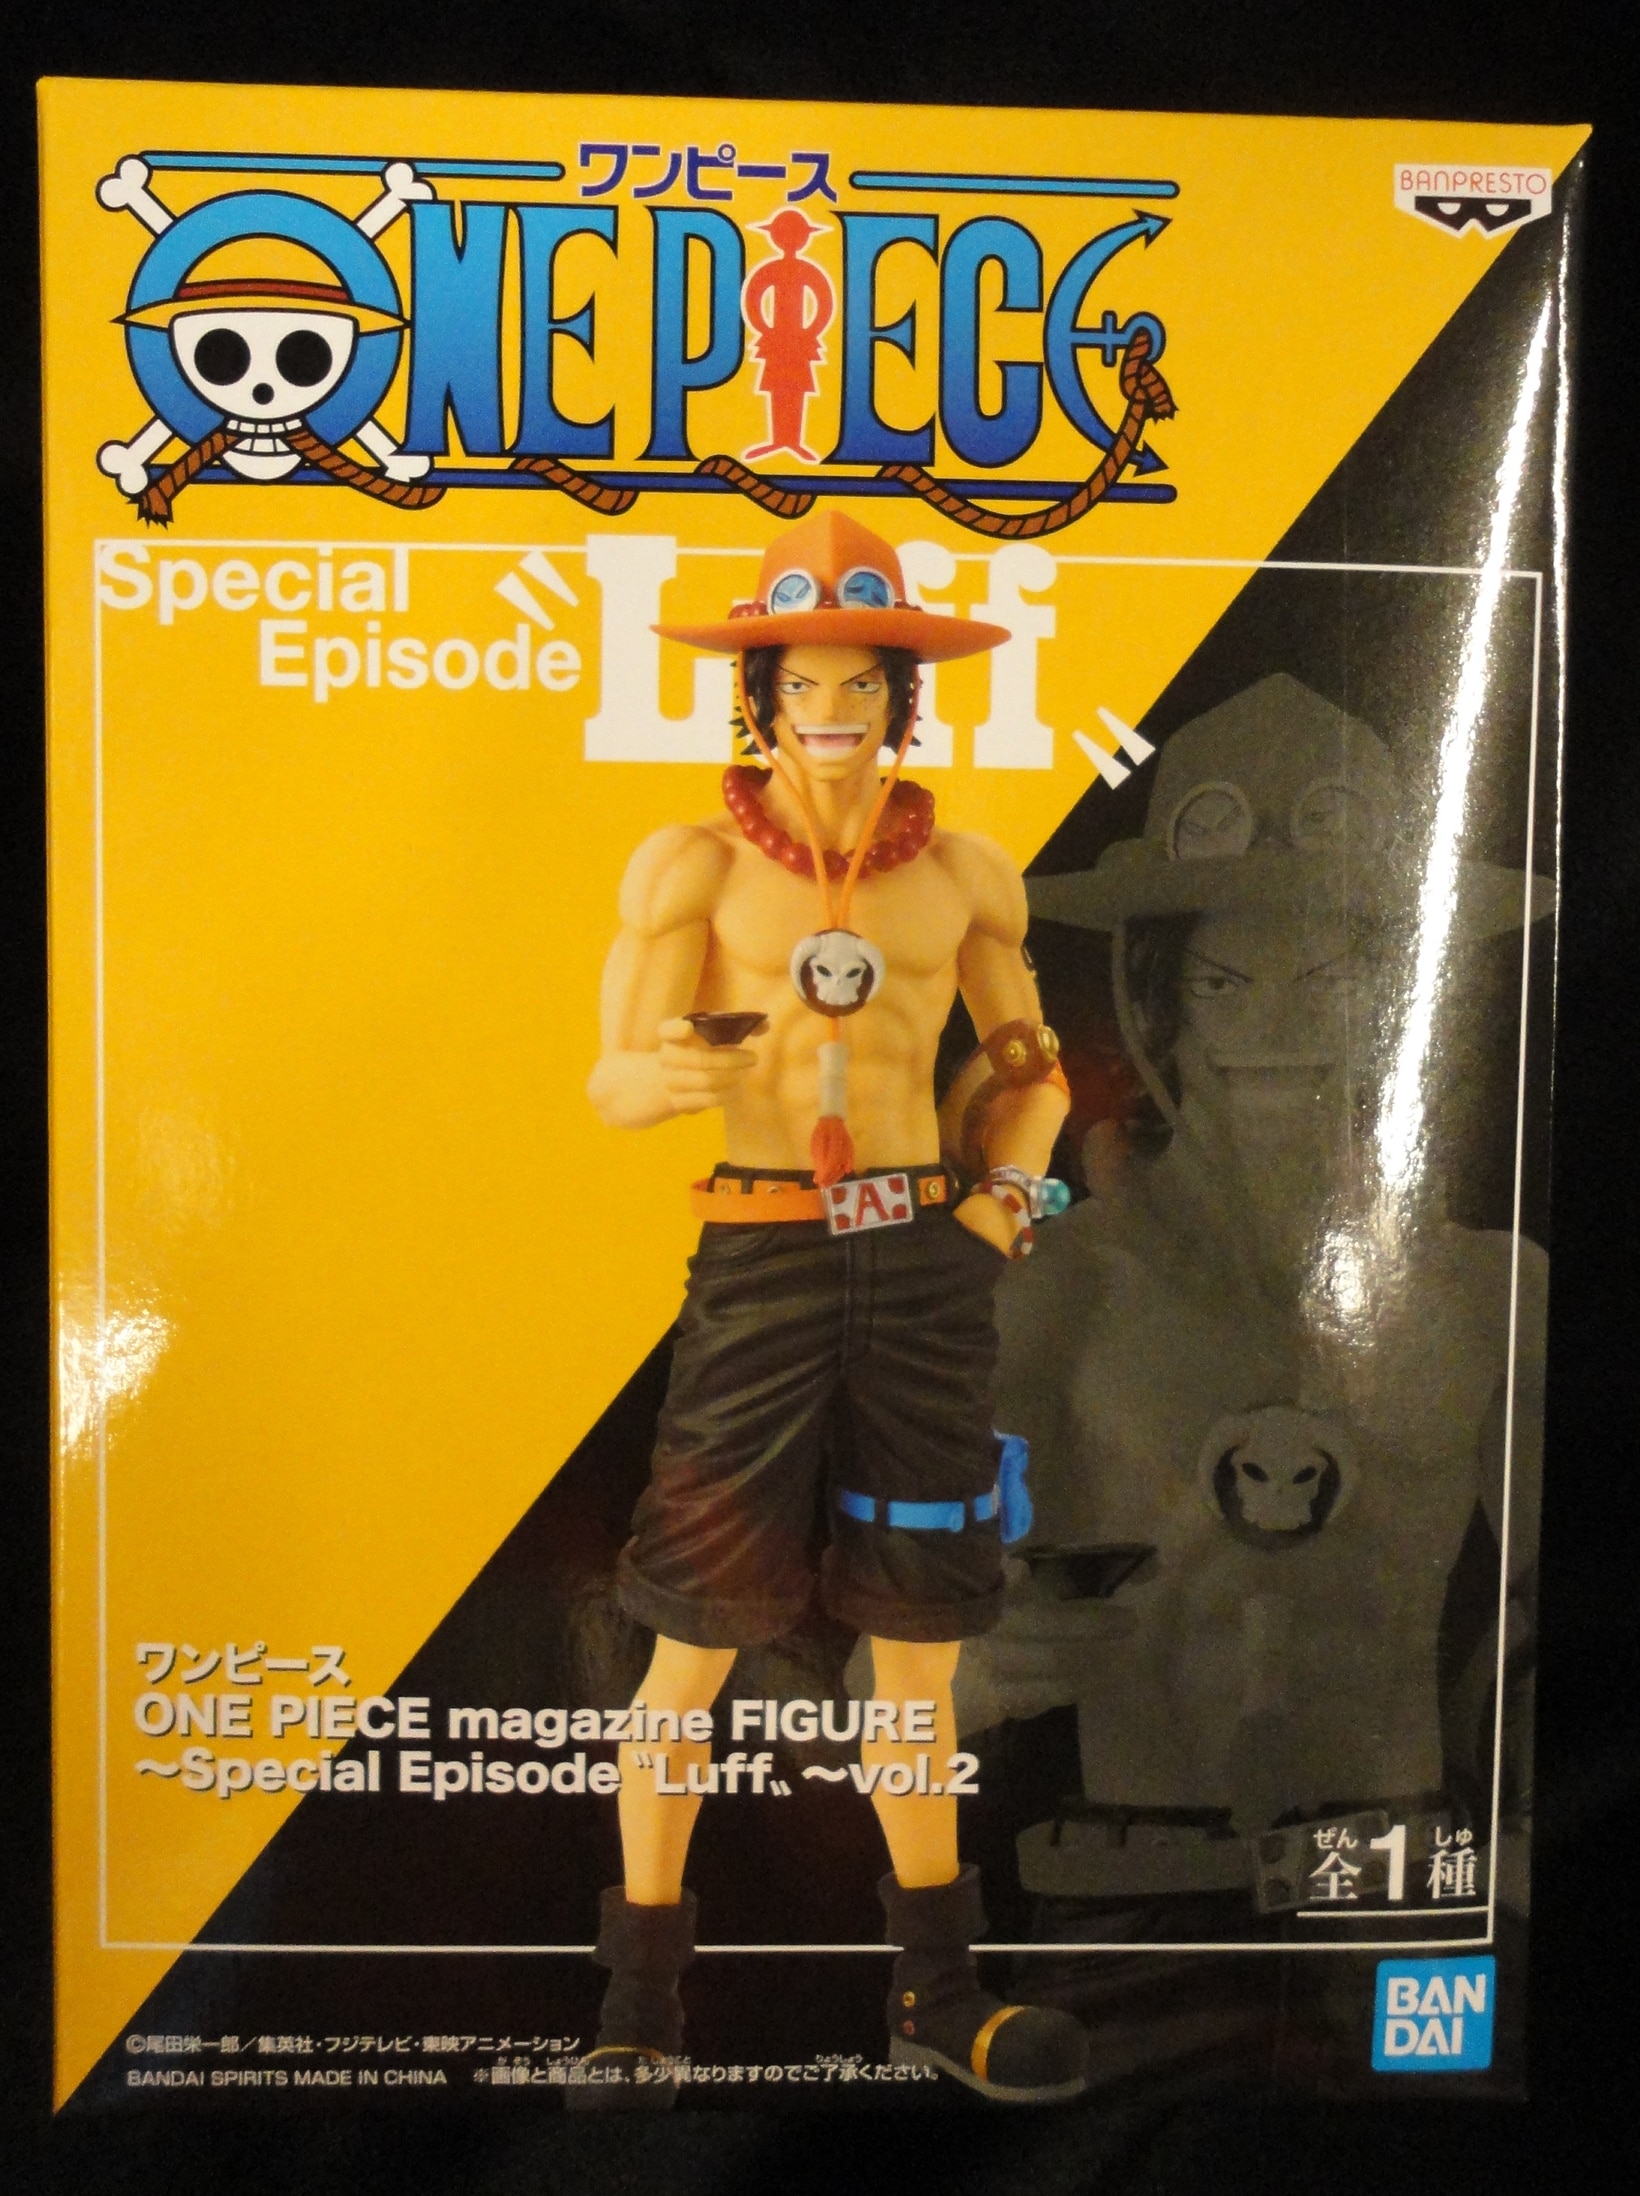 Bandai Spirits One Piece magazine FIGURE vol.2 Special Episode Luff Portgas  D. Ace